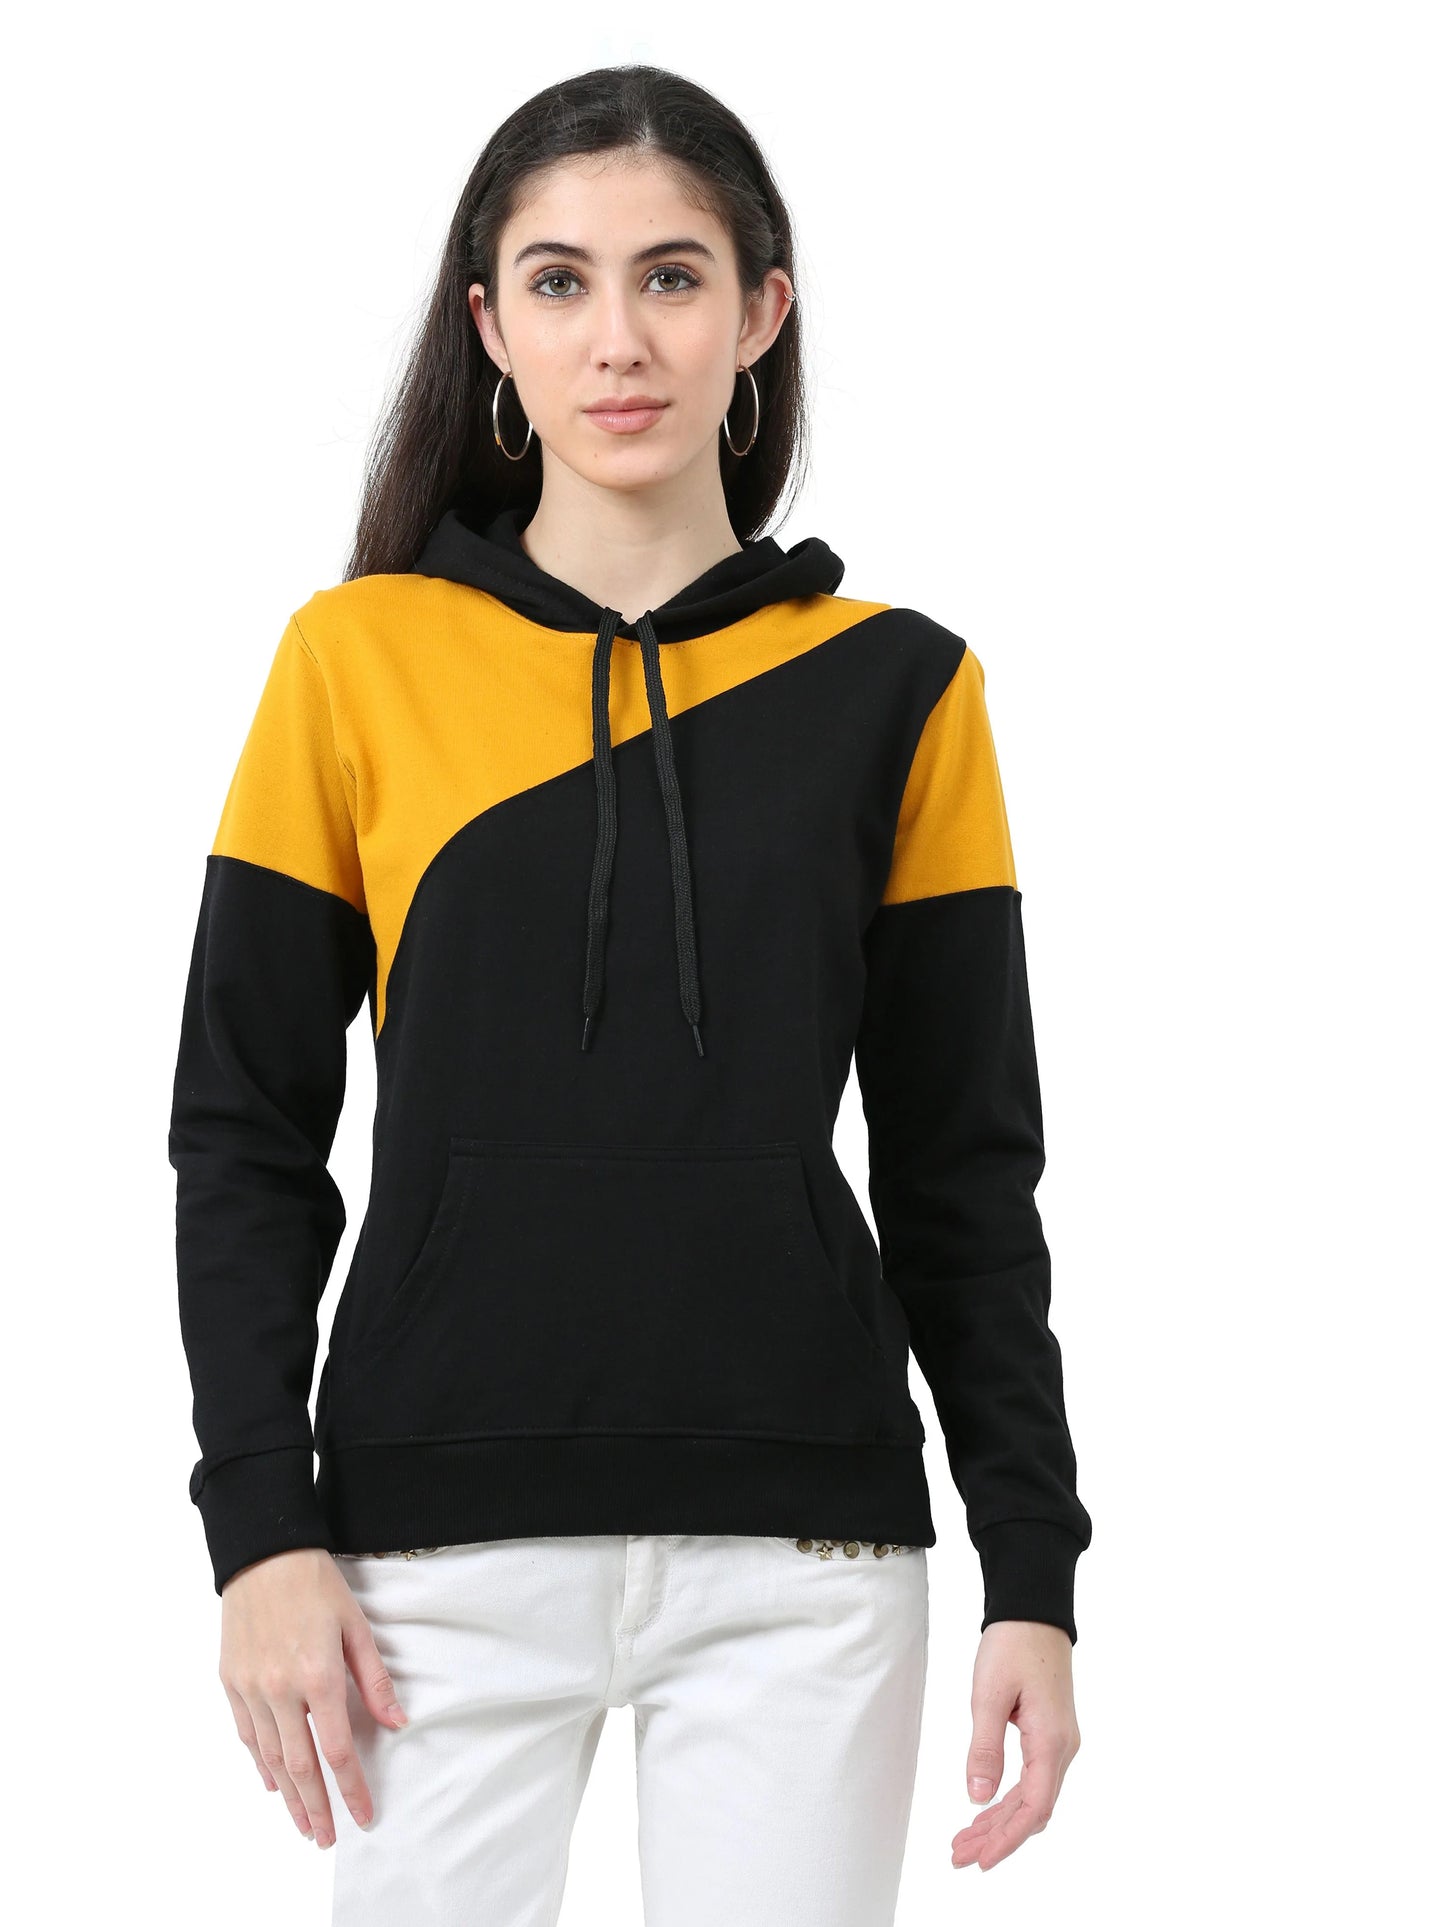 Fleximaa Womens Cotton Color Block Greyblack Sweatshirt Hoodies 3XL Size - fleximaa-so